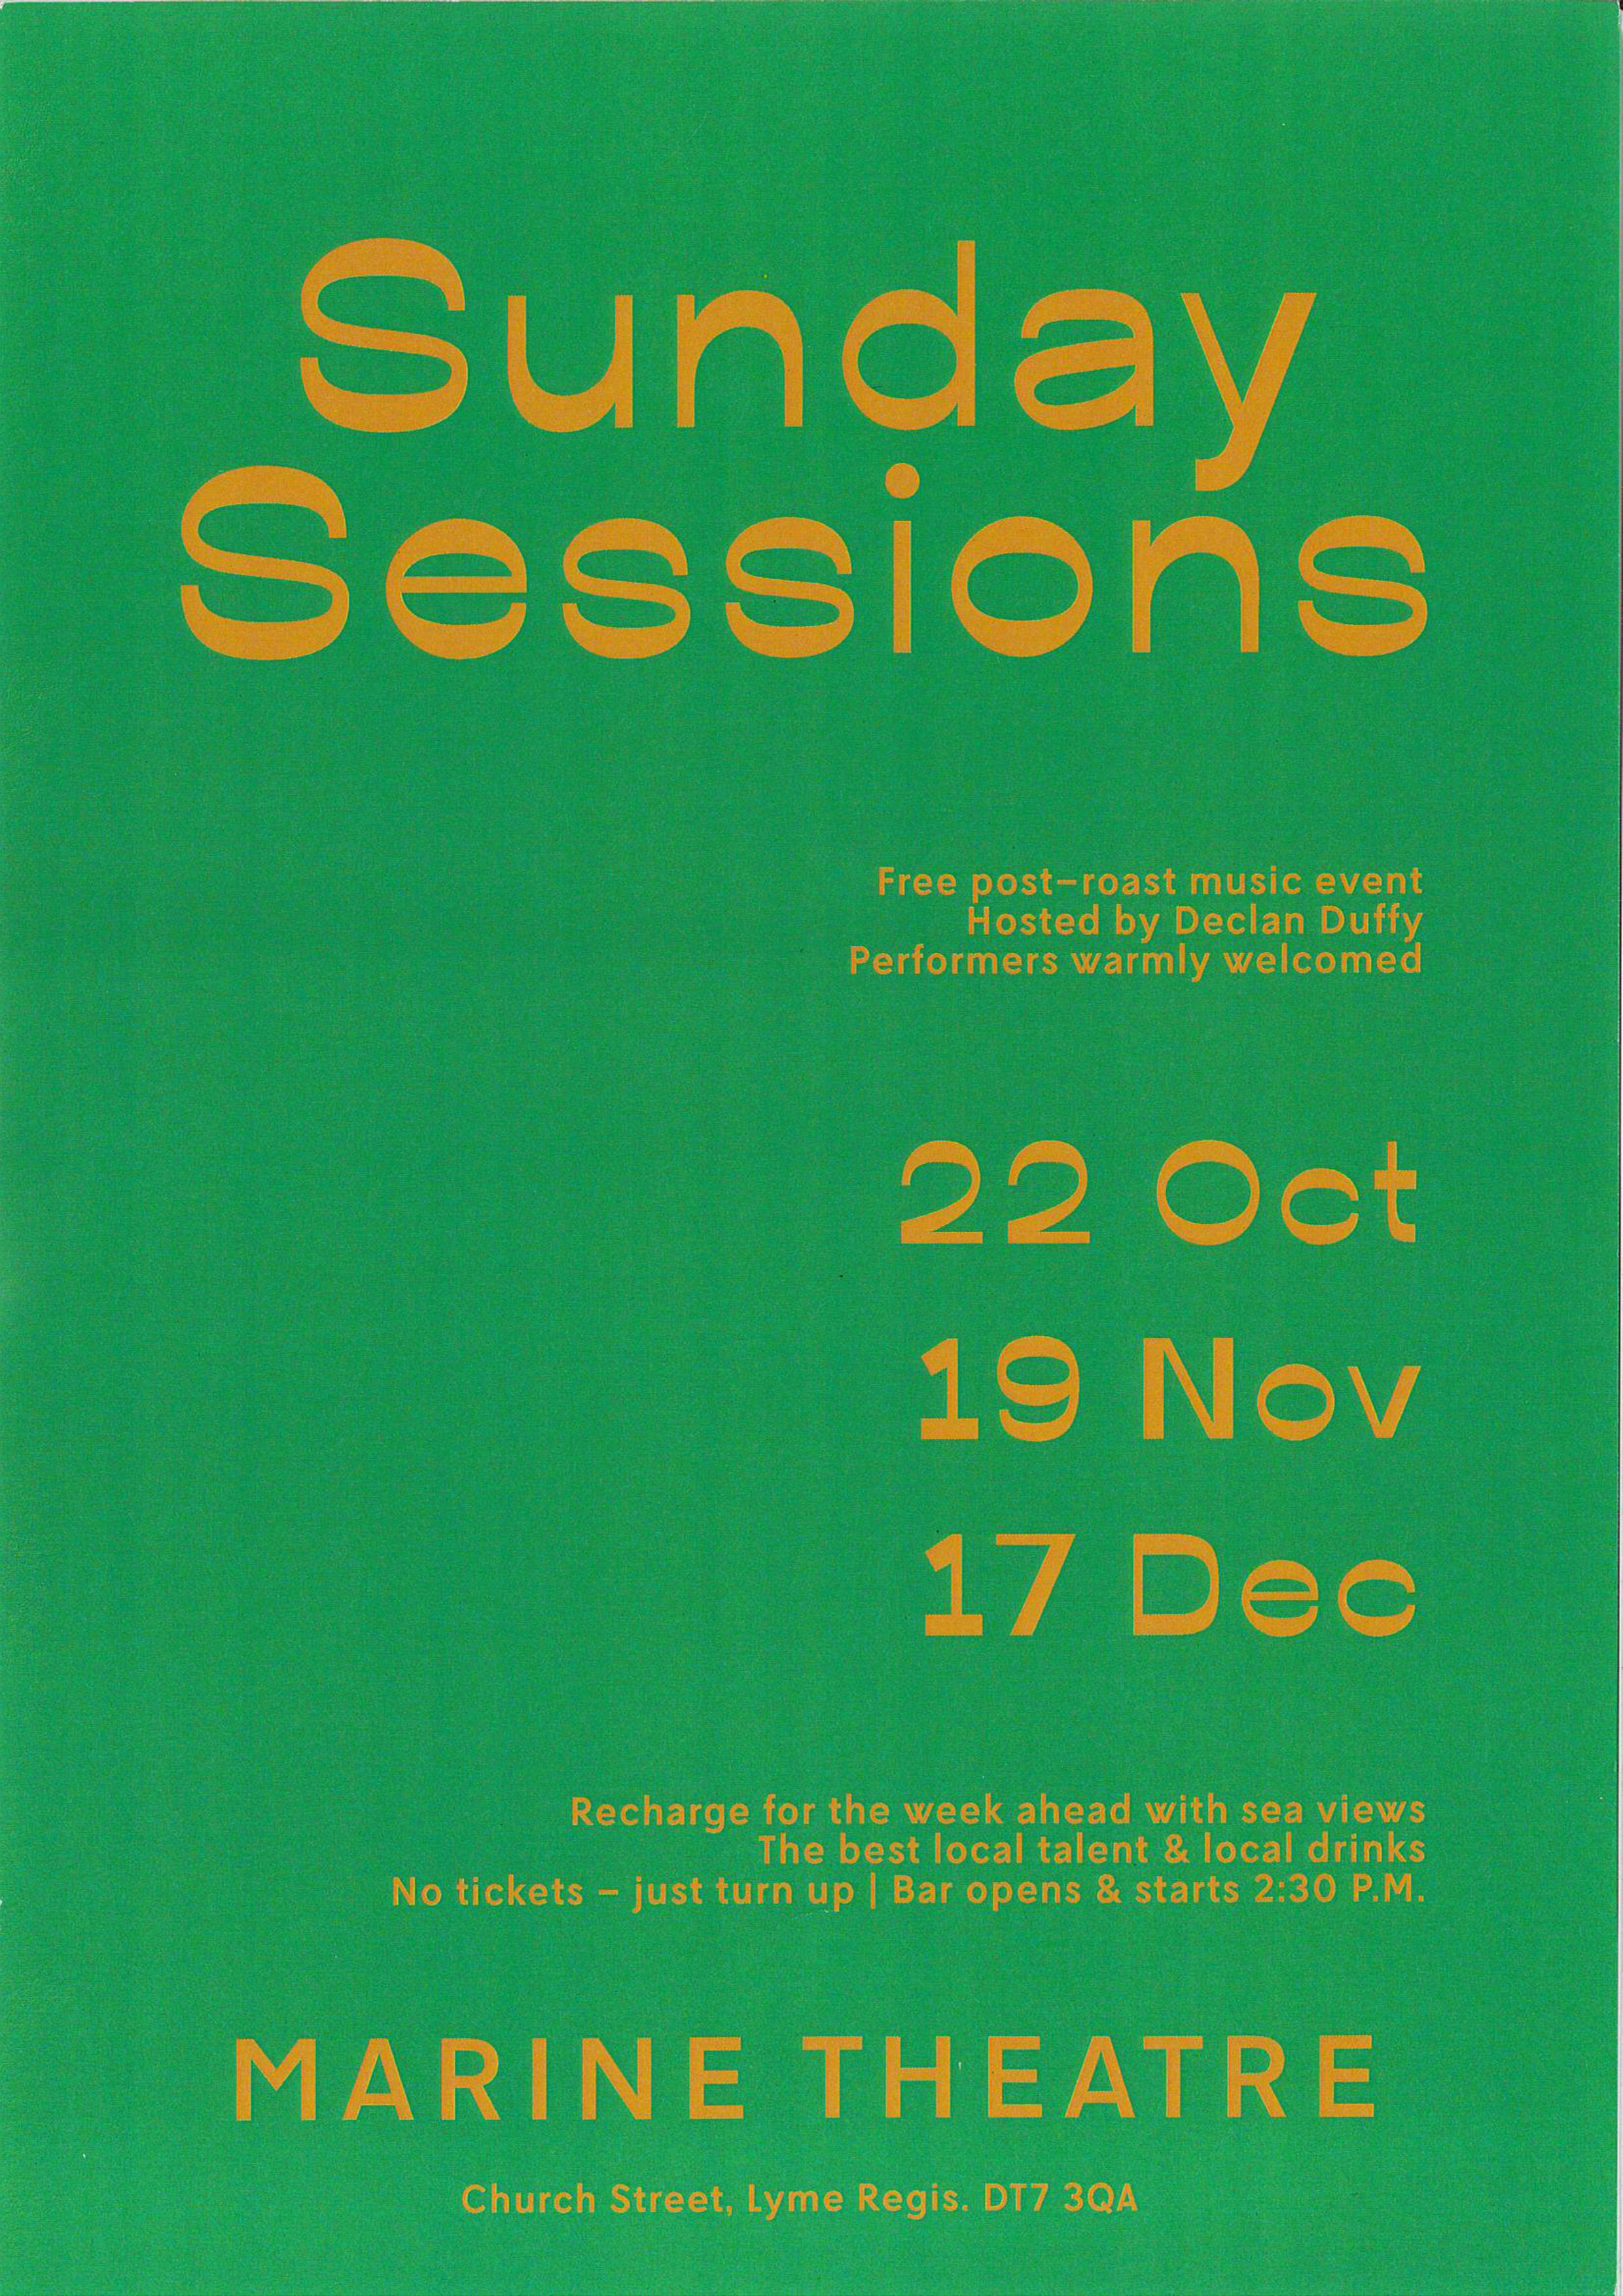 Sunday Sessions Lyme Regis Town Council